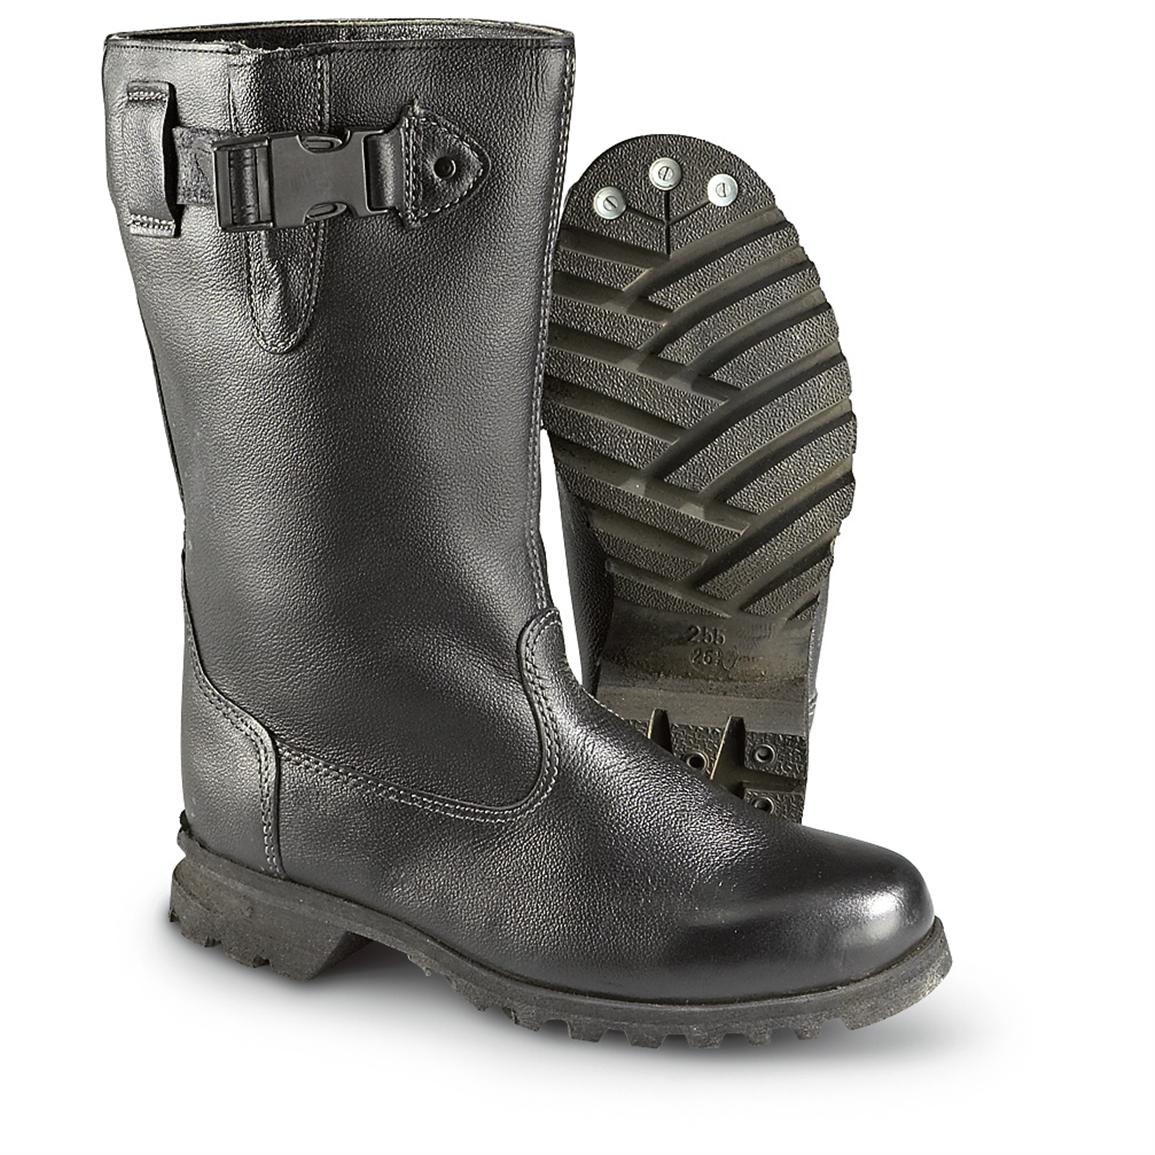 Men's New Czech Military Leather Jack Boots, Black - 163441, Combat ...